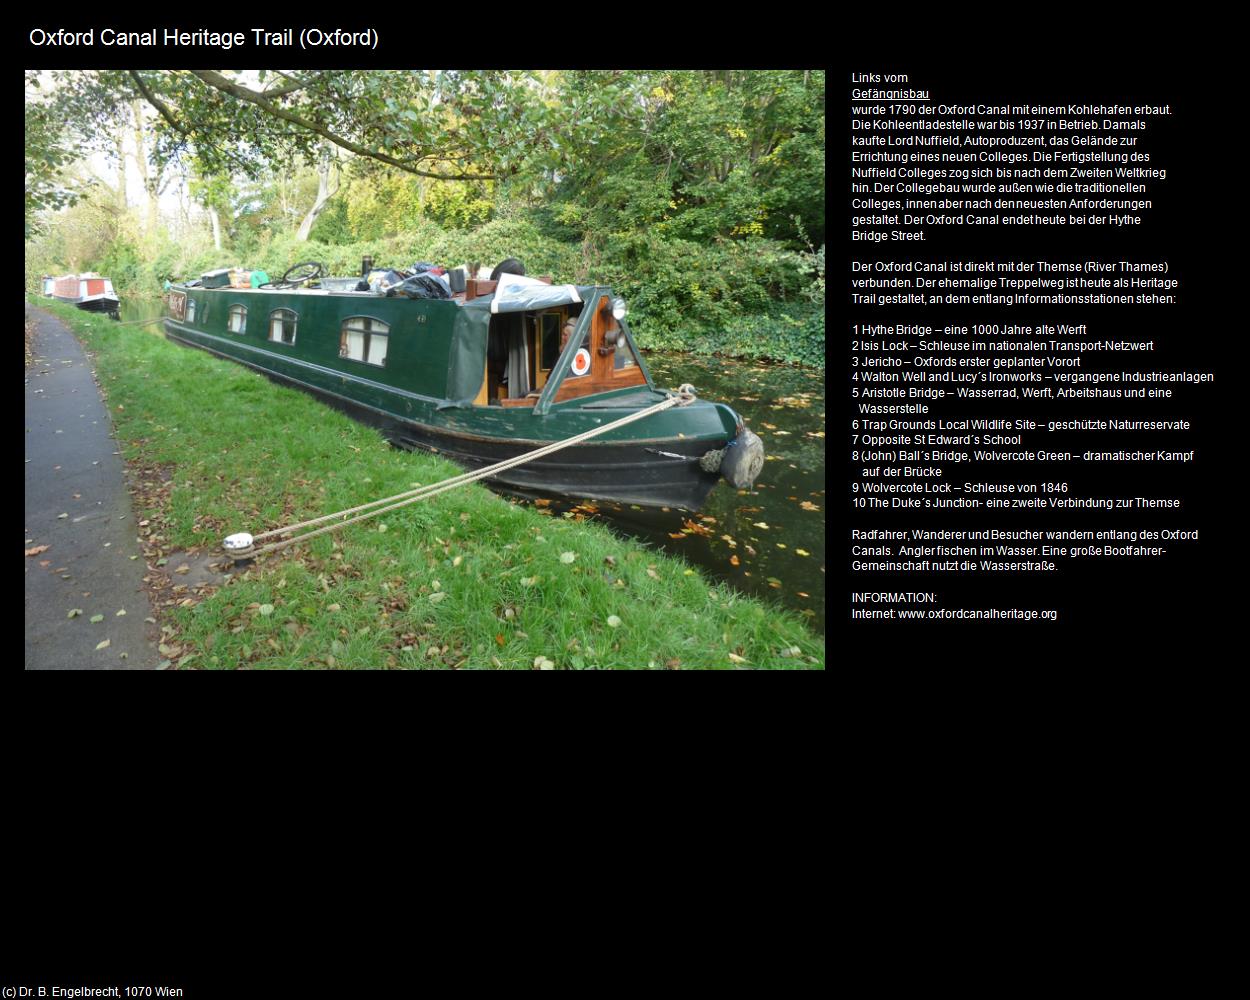 Oxford Canal Heritage Trail (Oxford, England) in Kulturatlas-ENGLAND und WALES(c)B.Engelbrecht